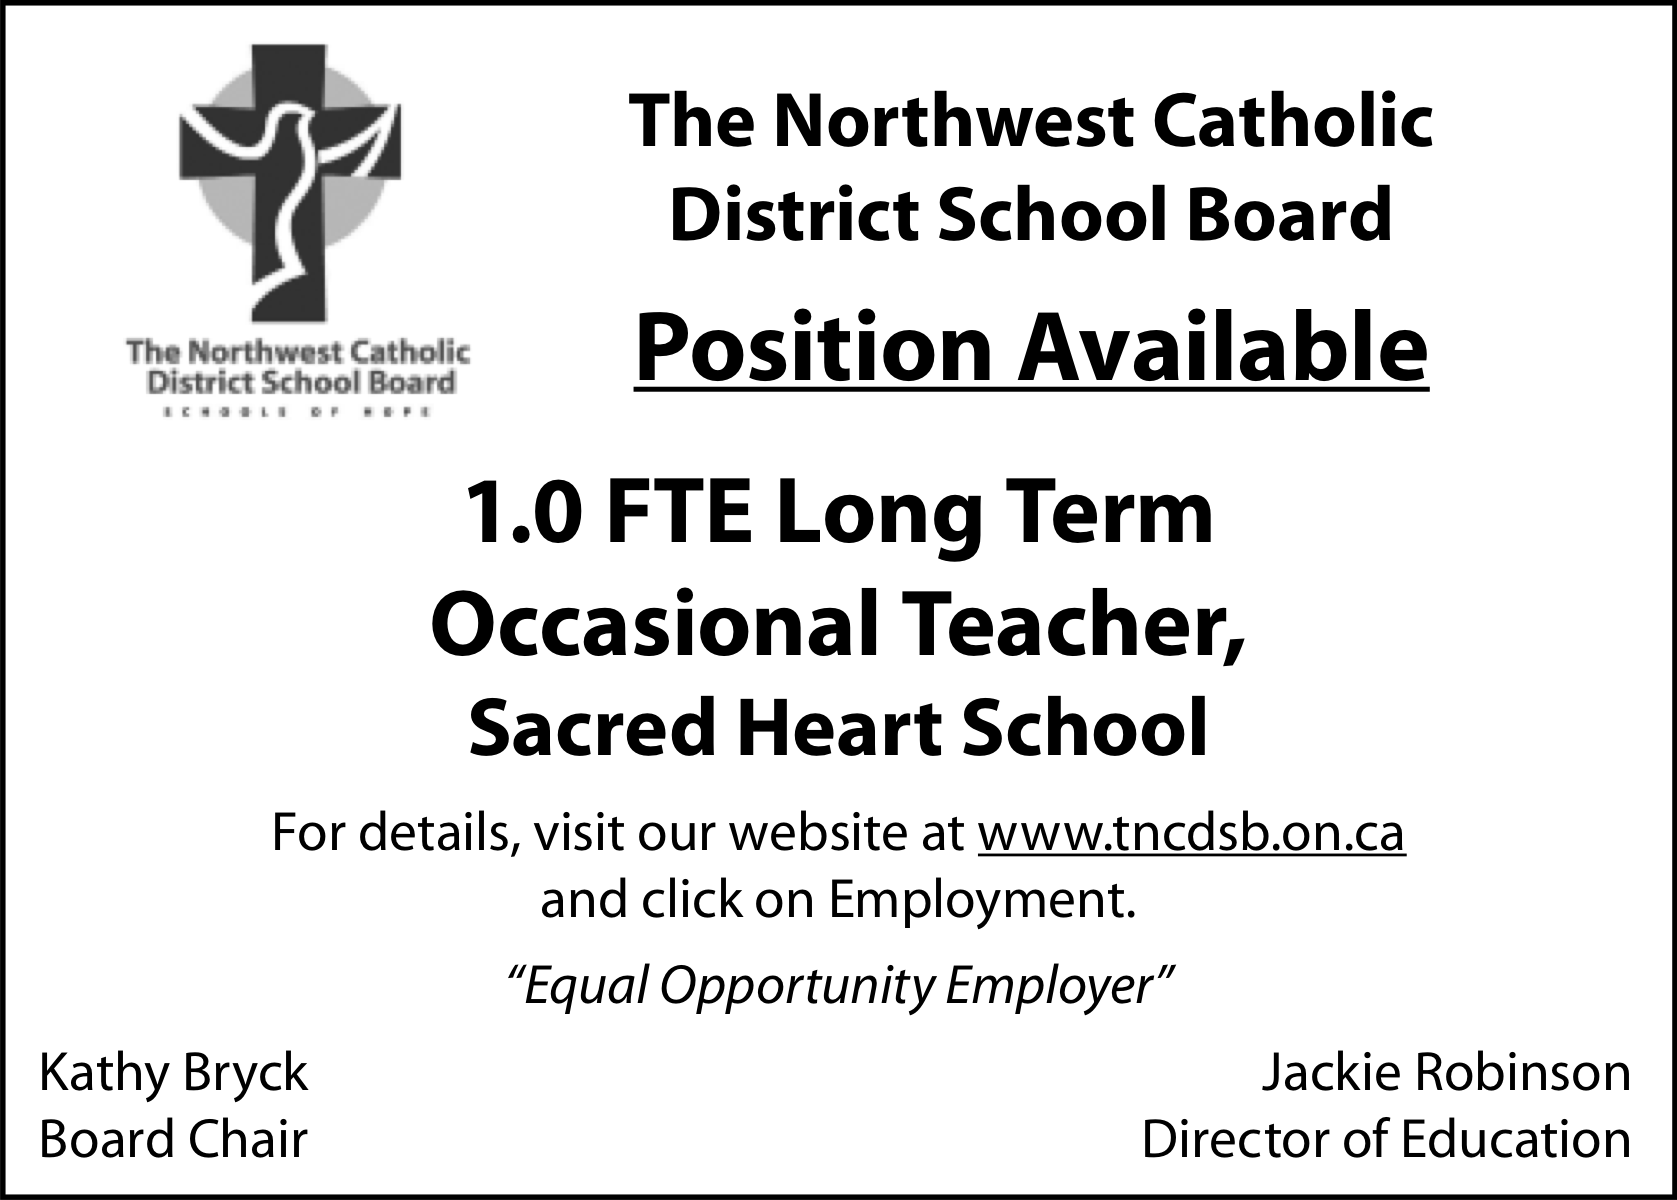 Long Term Occasional Teacher, Sacred Heart School